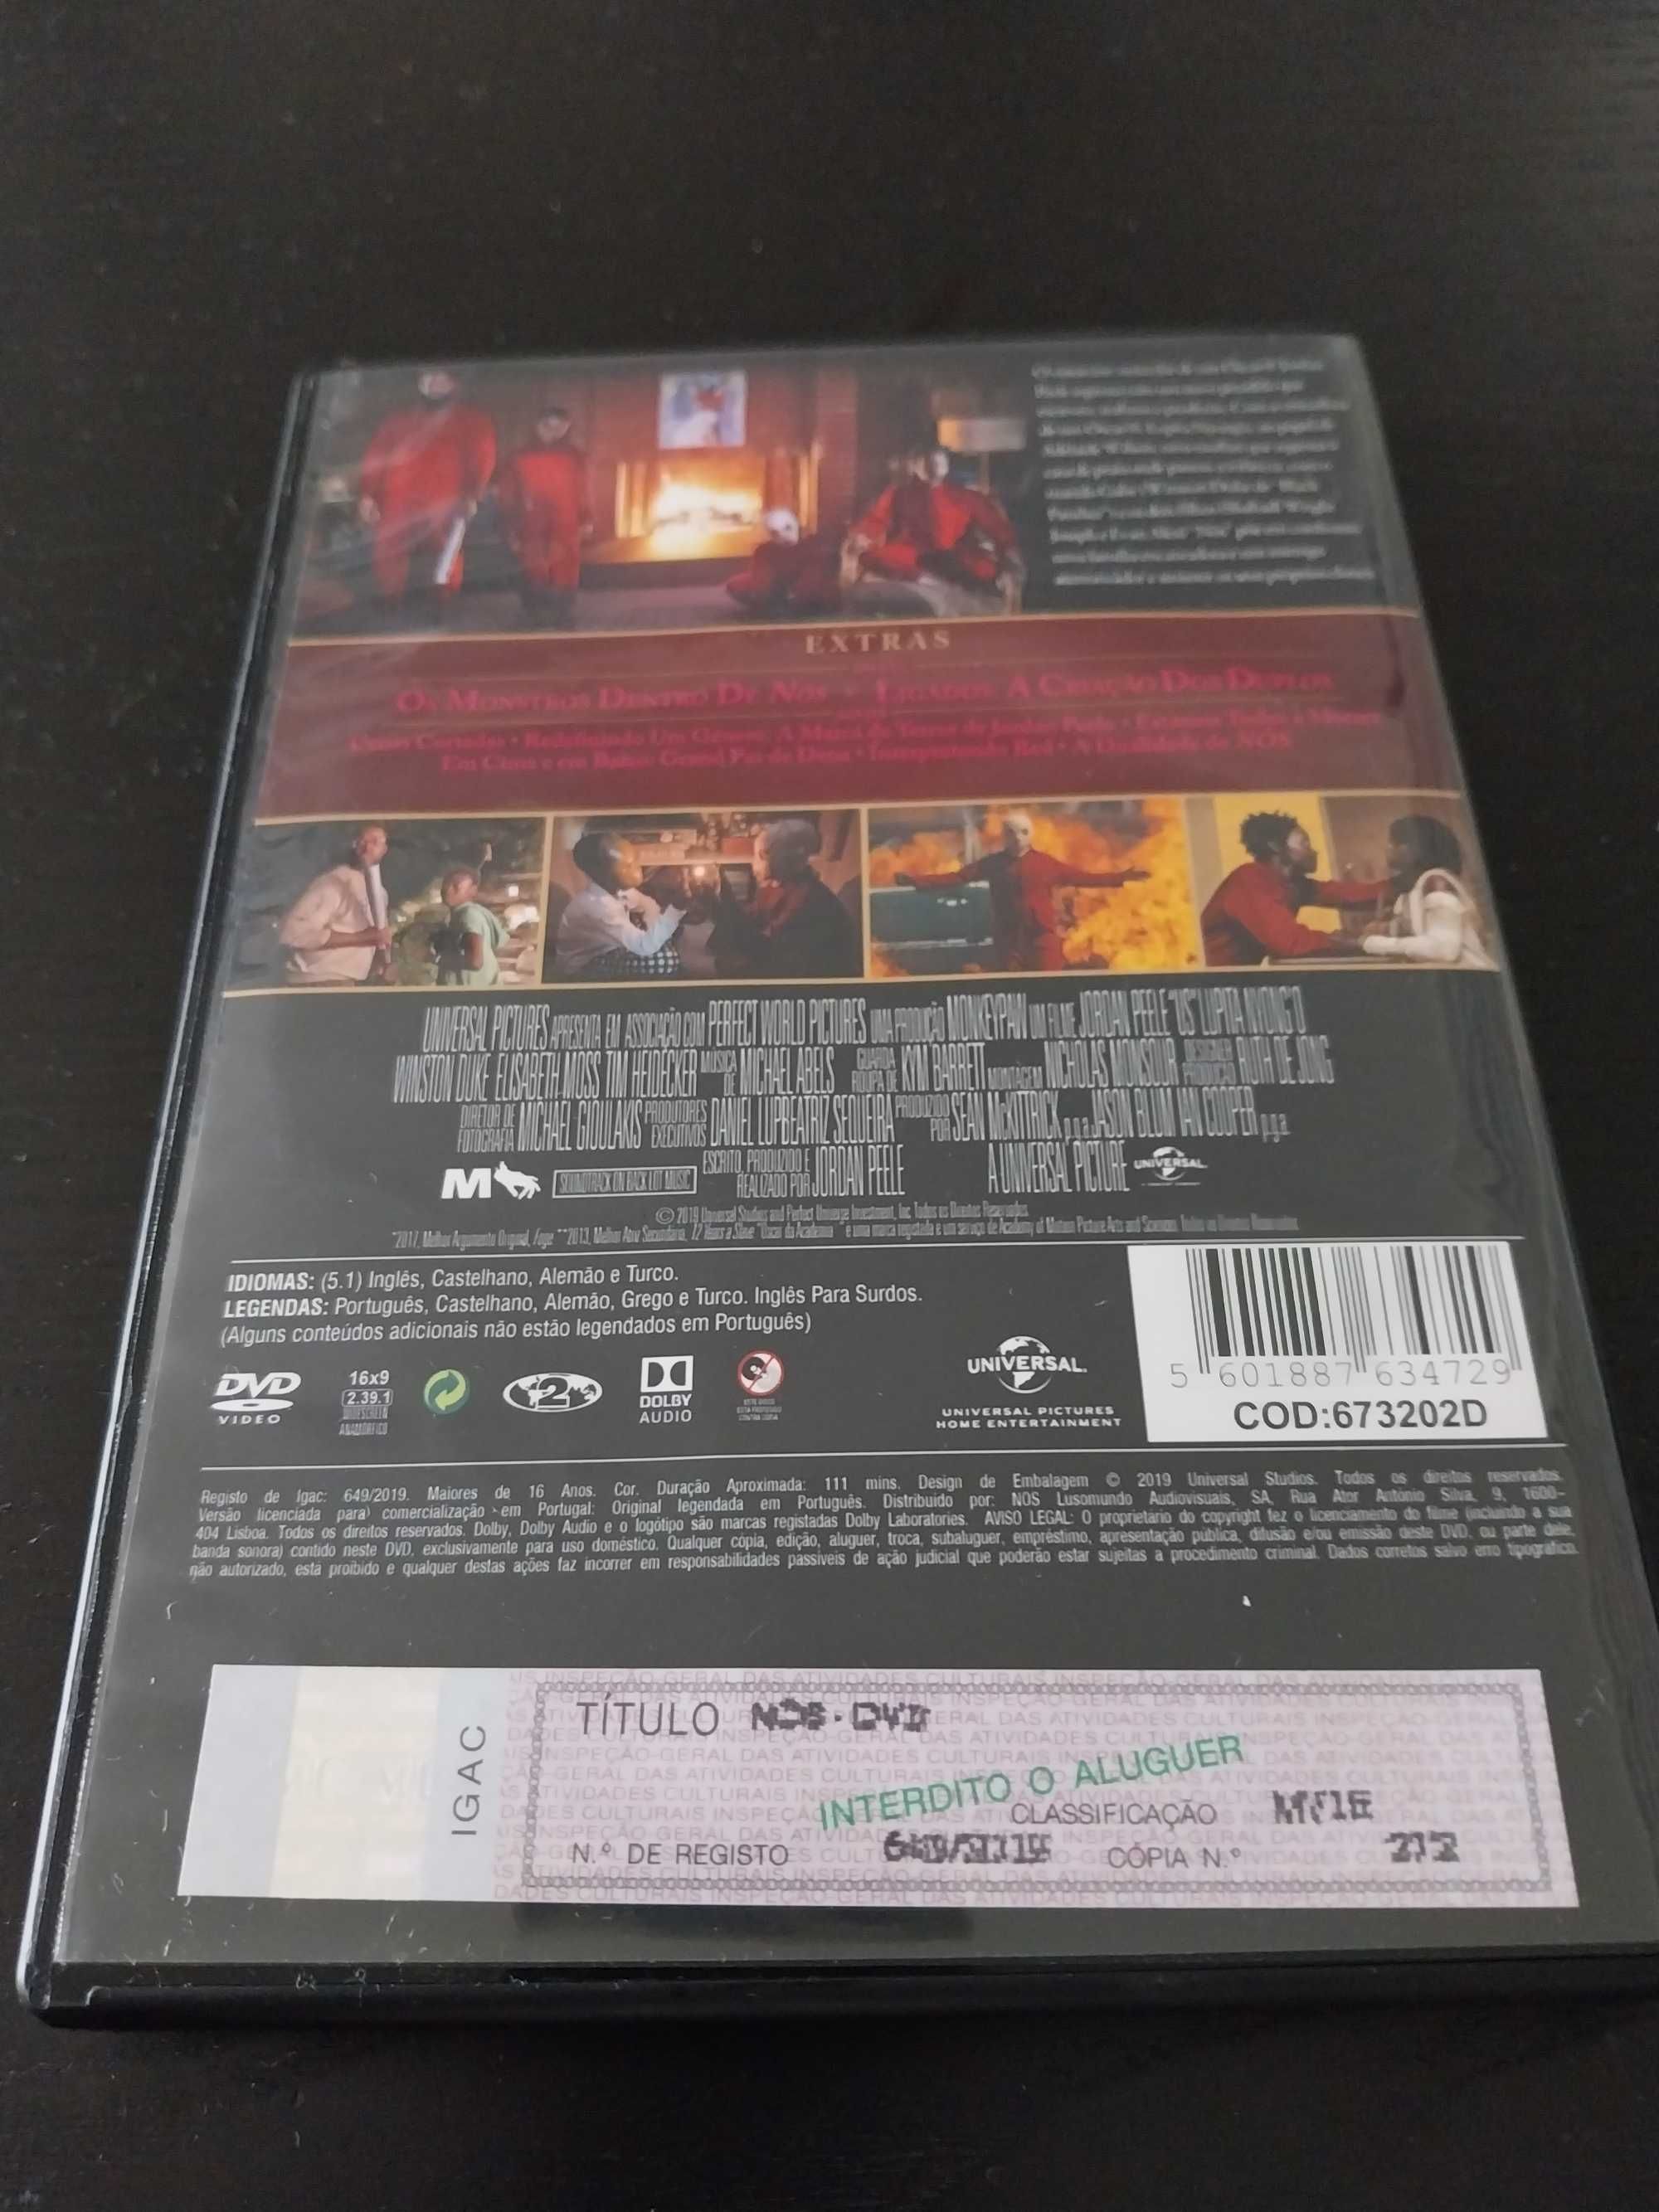 DVD “Nós”, de Jordan Peel